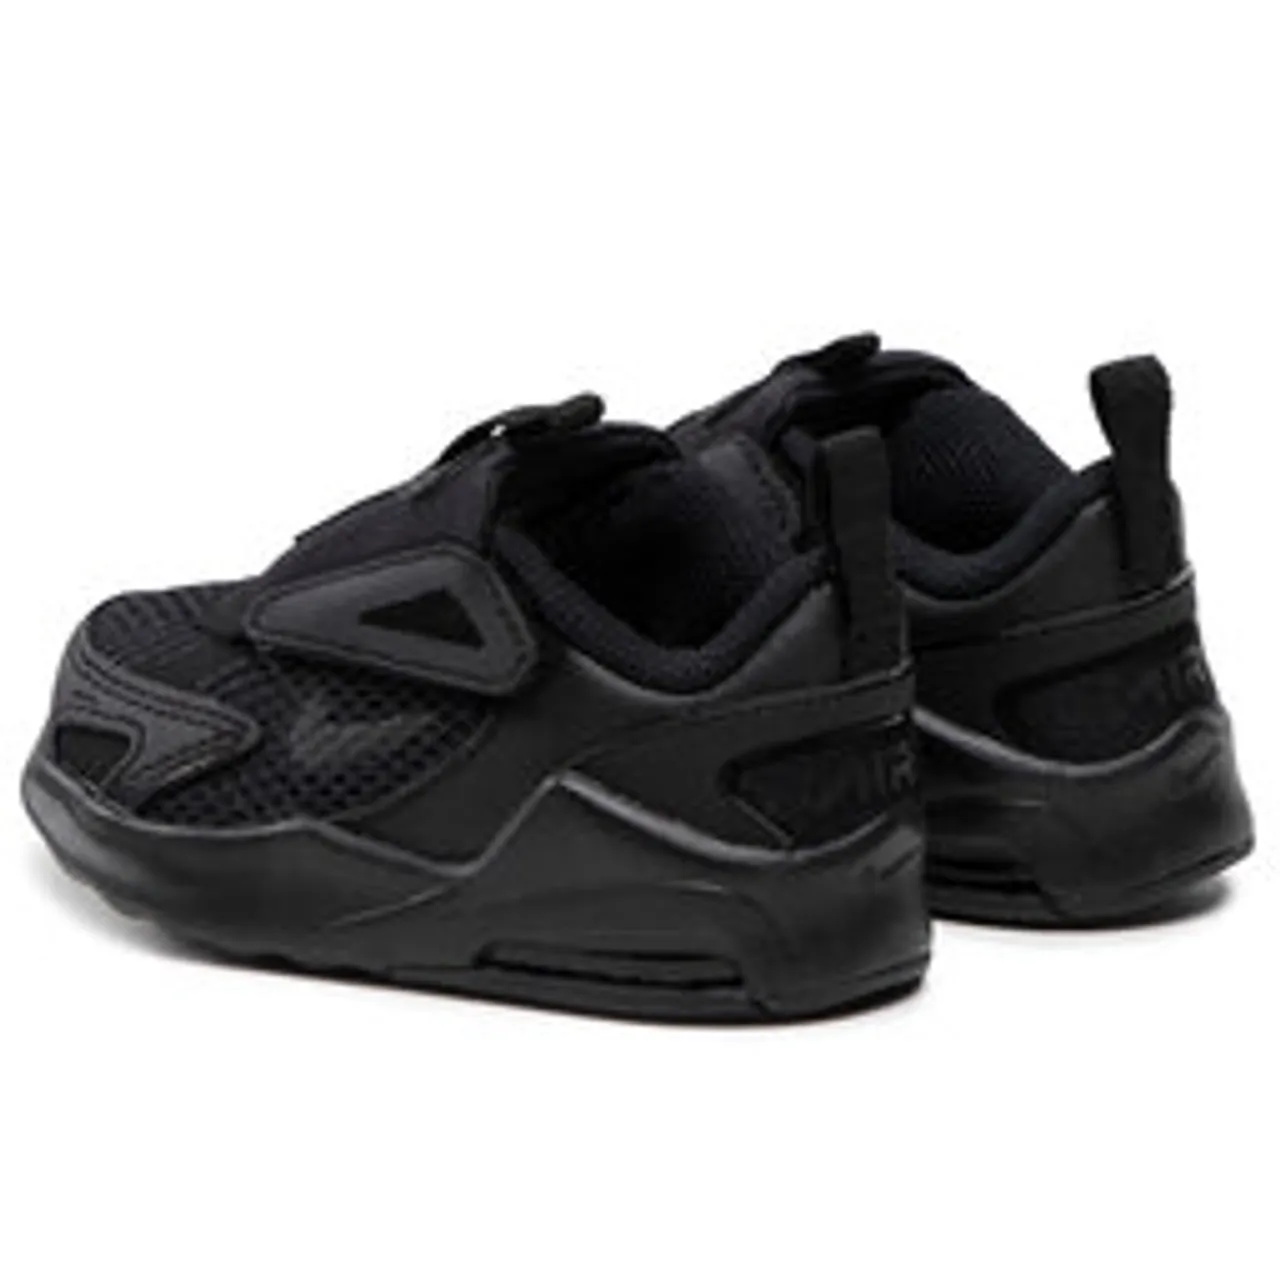 Schuhe Nike Air Max Bolt (Tde) CW1629 001 Black/Black/Black